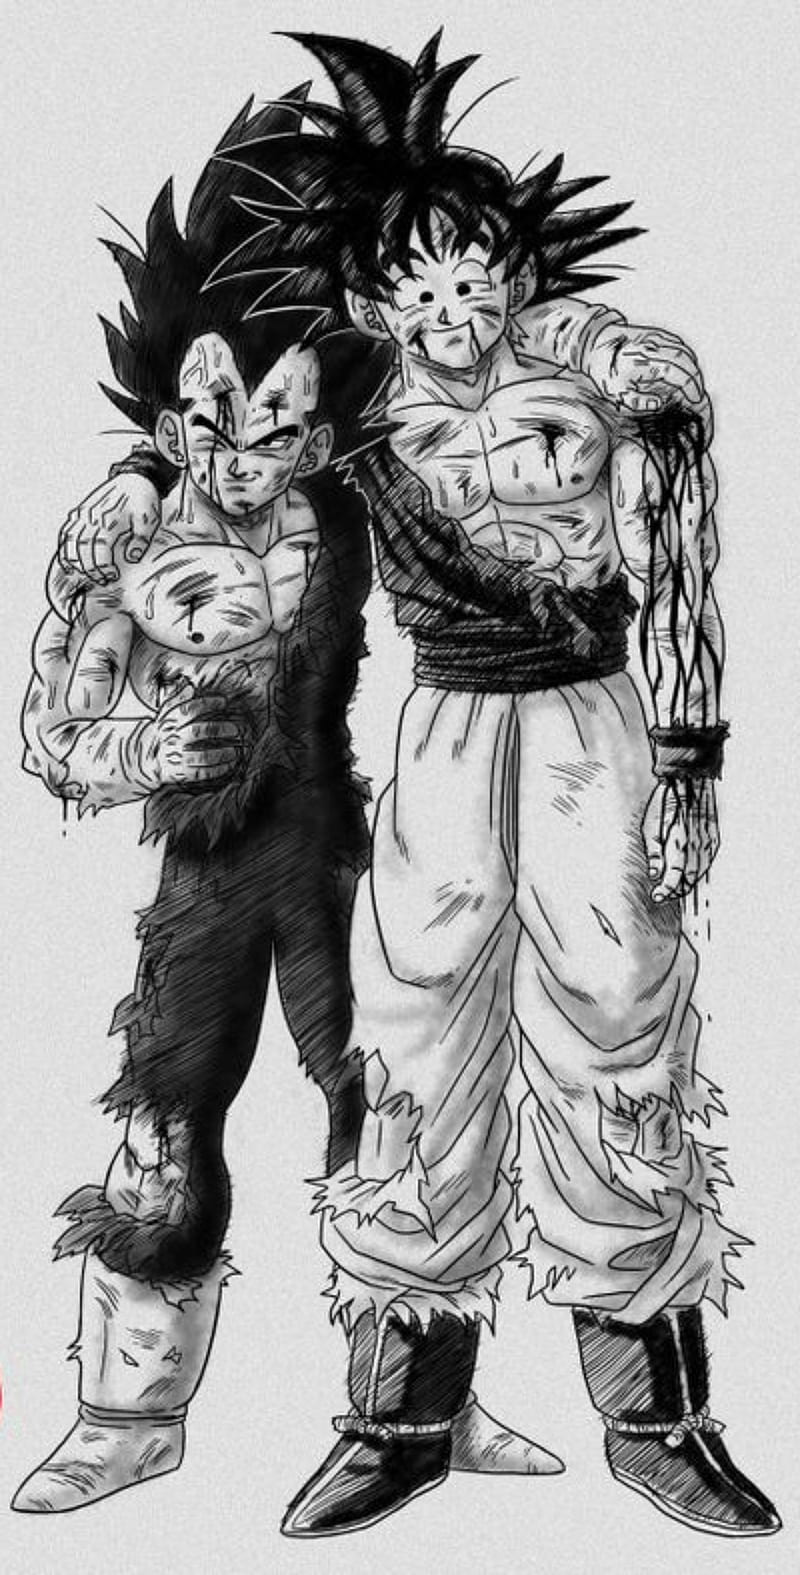 Goku Black Vegeta Drawing Line art, dragon ball black and white